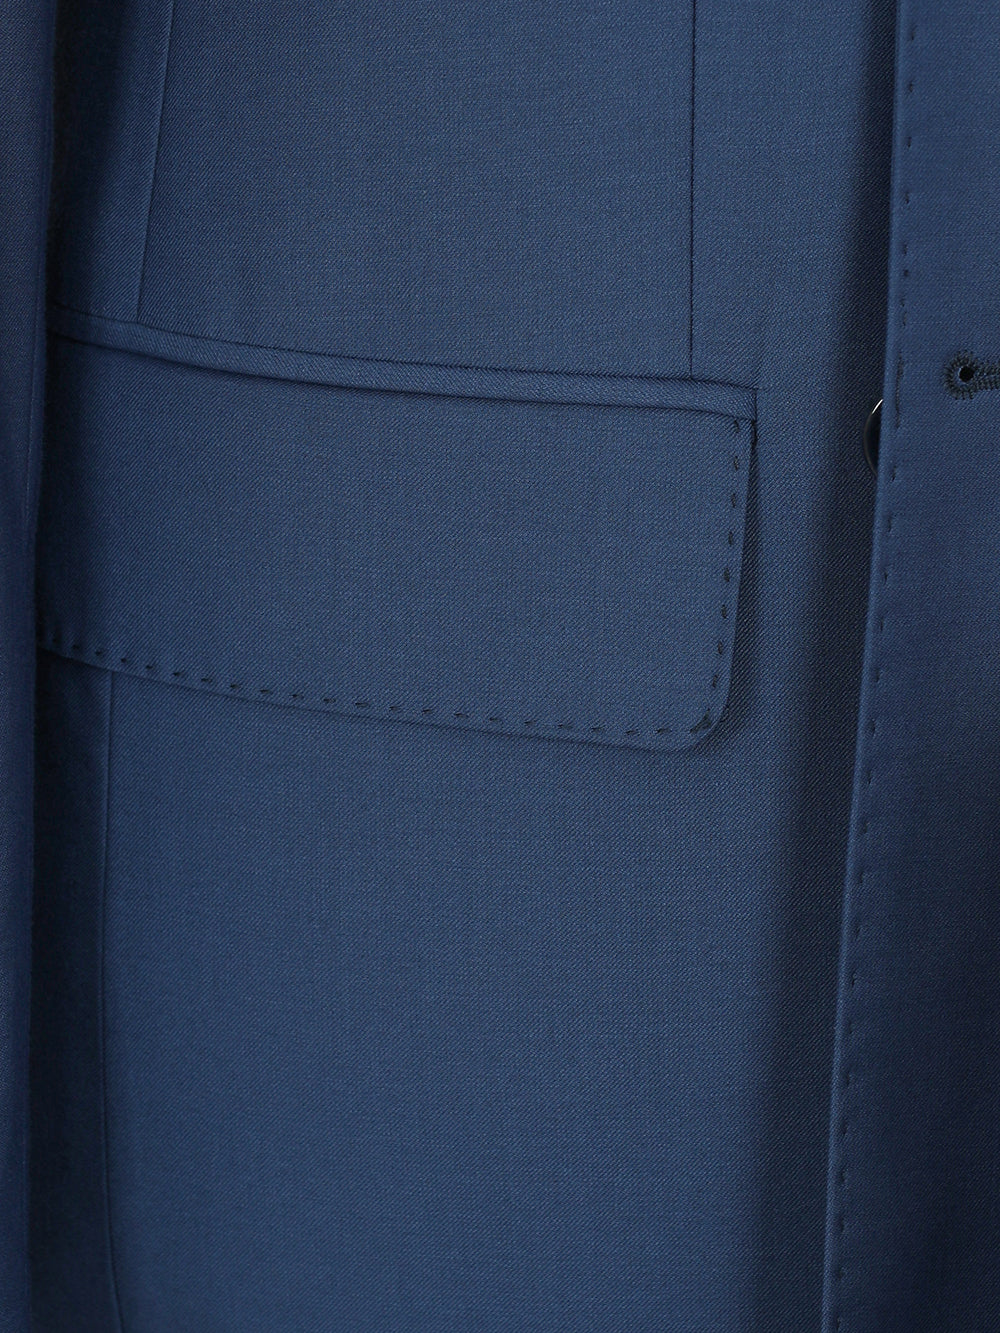 Smile Blue Double Bespoke Men Suit Tailored